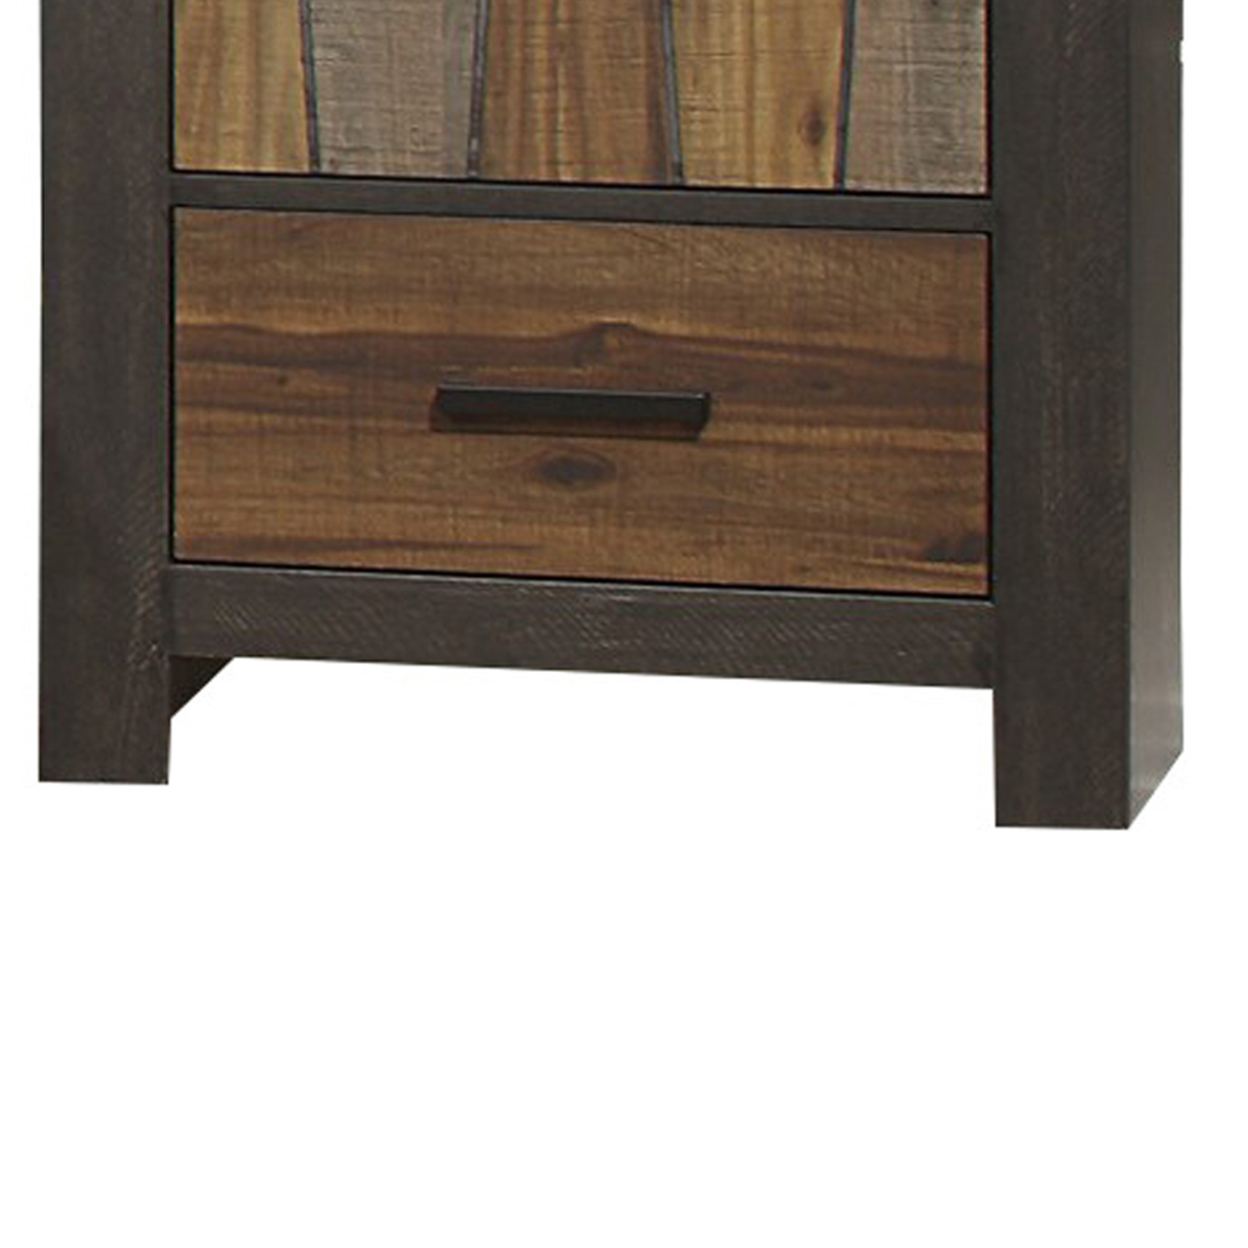 Plank Style 2 Drawer Wooden Nightstand With Metal Bar Handles, Brown- Saltoro Sherpi